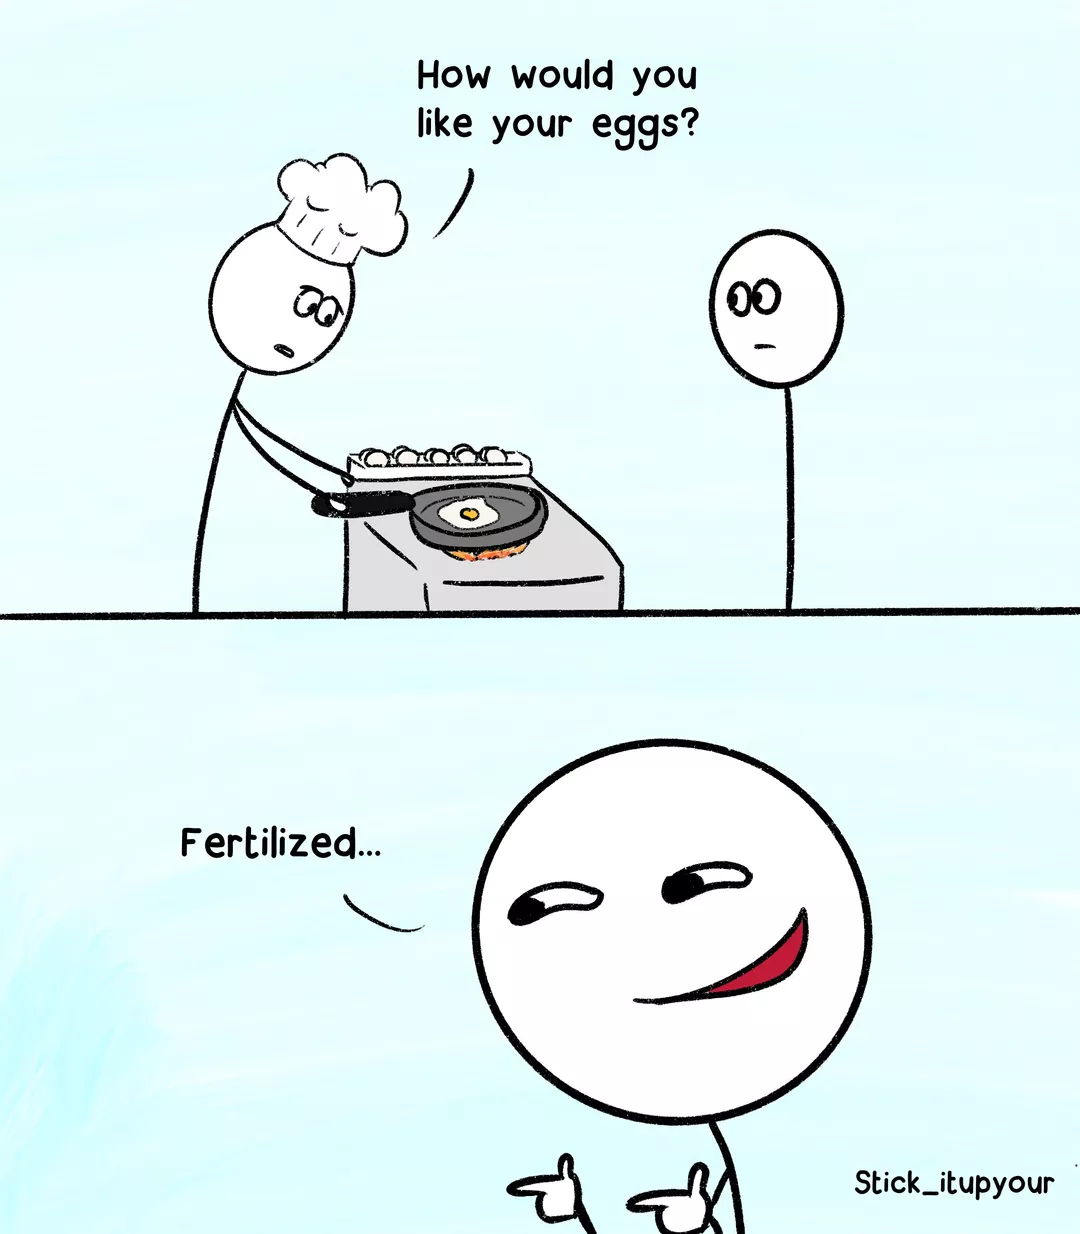 Eggs anyone?